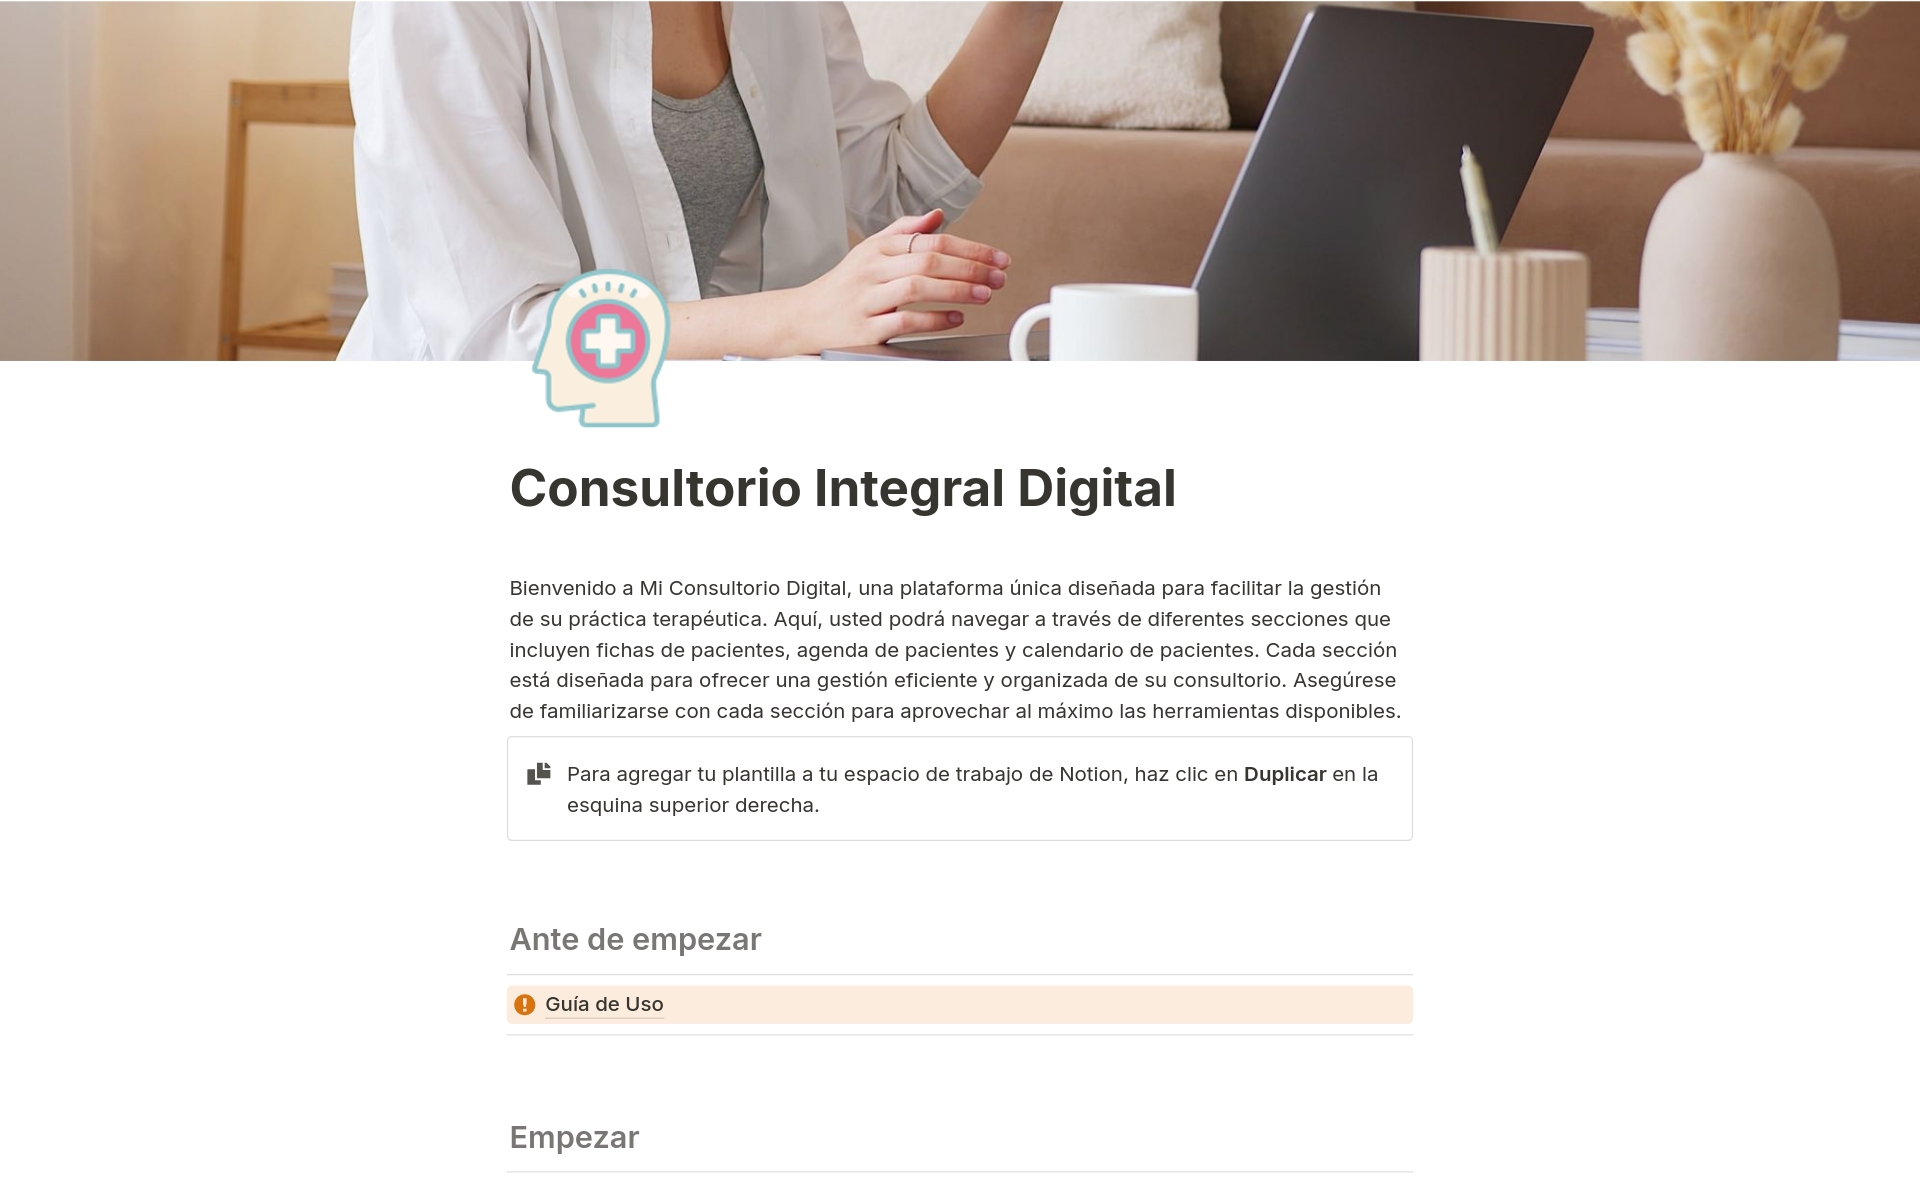 A template preview for Consultorio Integral Digital